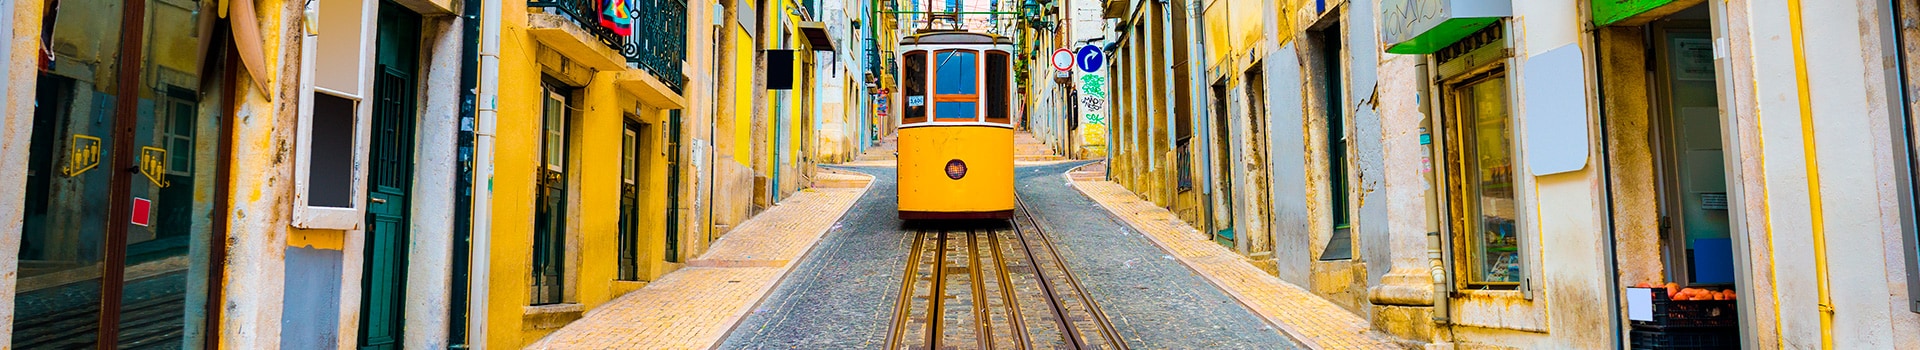 Rio de janeiro - Lissabon